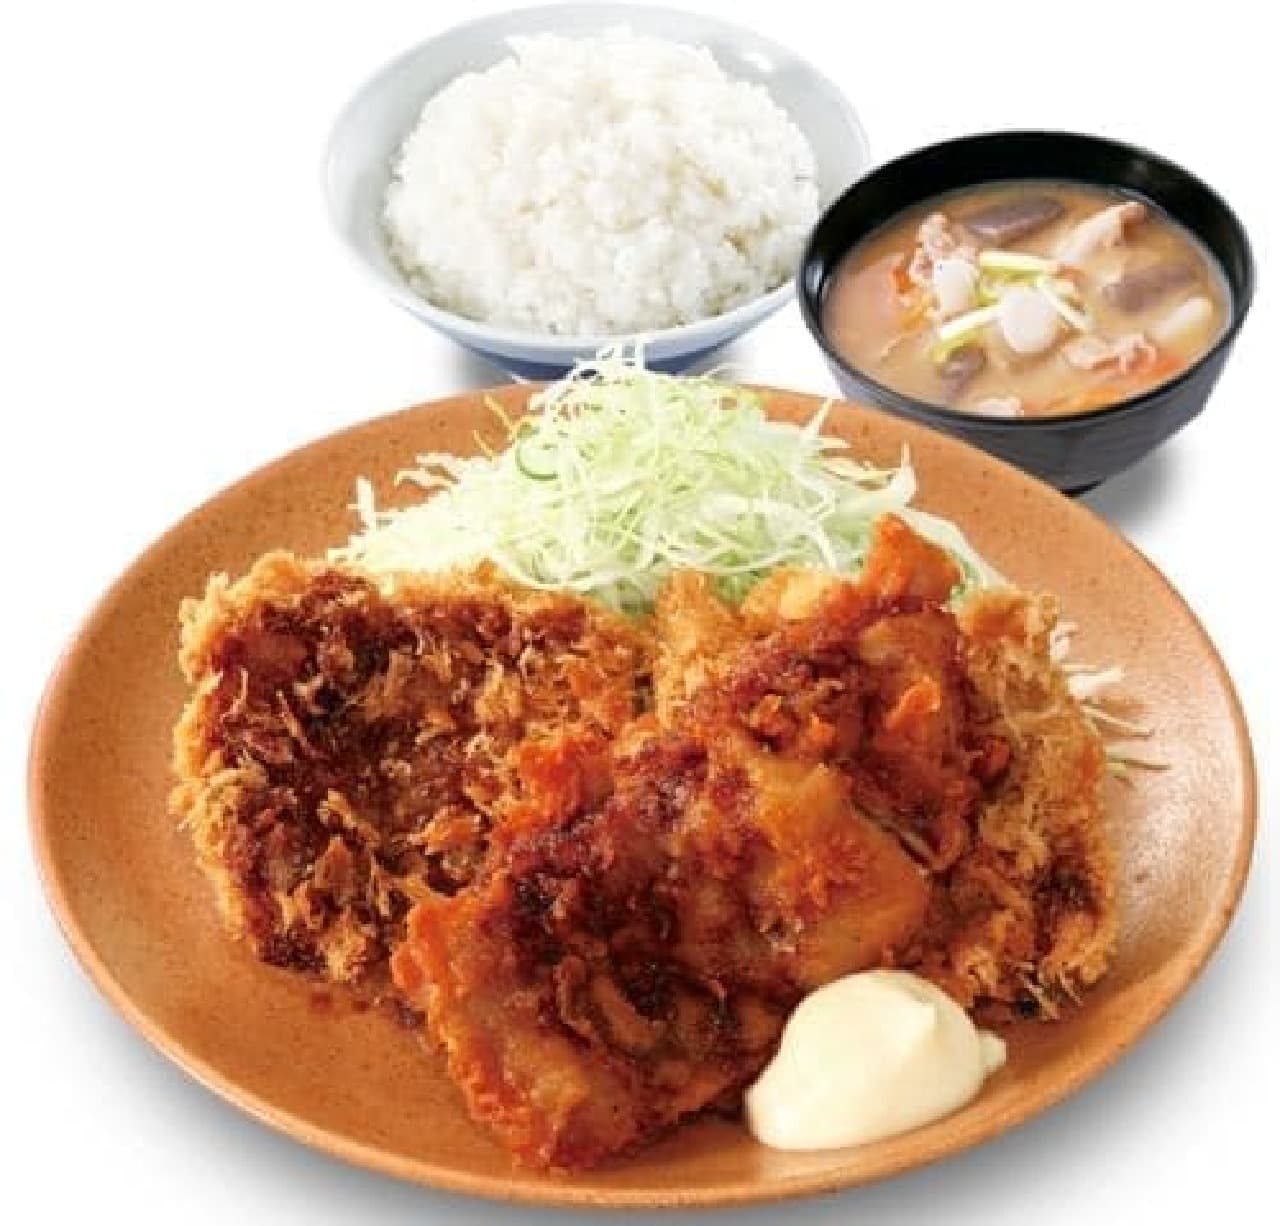 Katsuya "Chicken cutlet and fried chicken set meal"